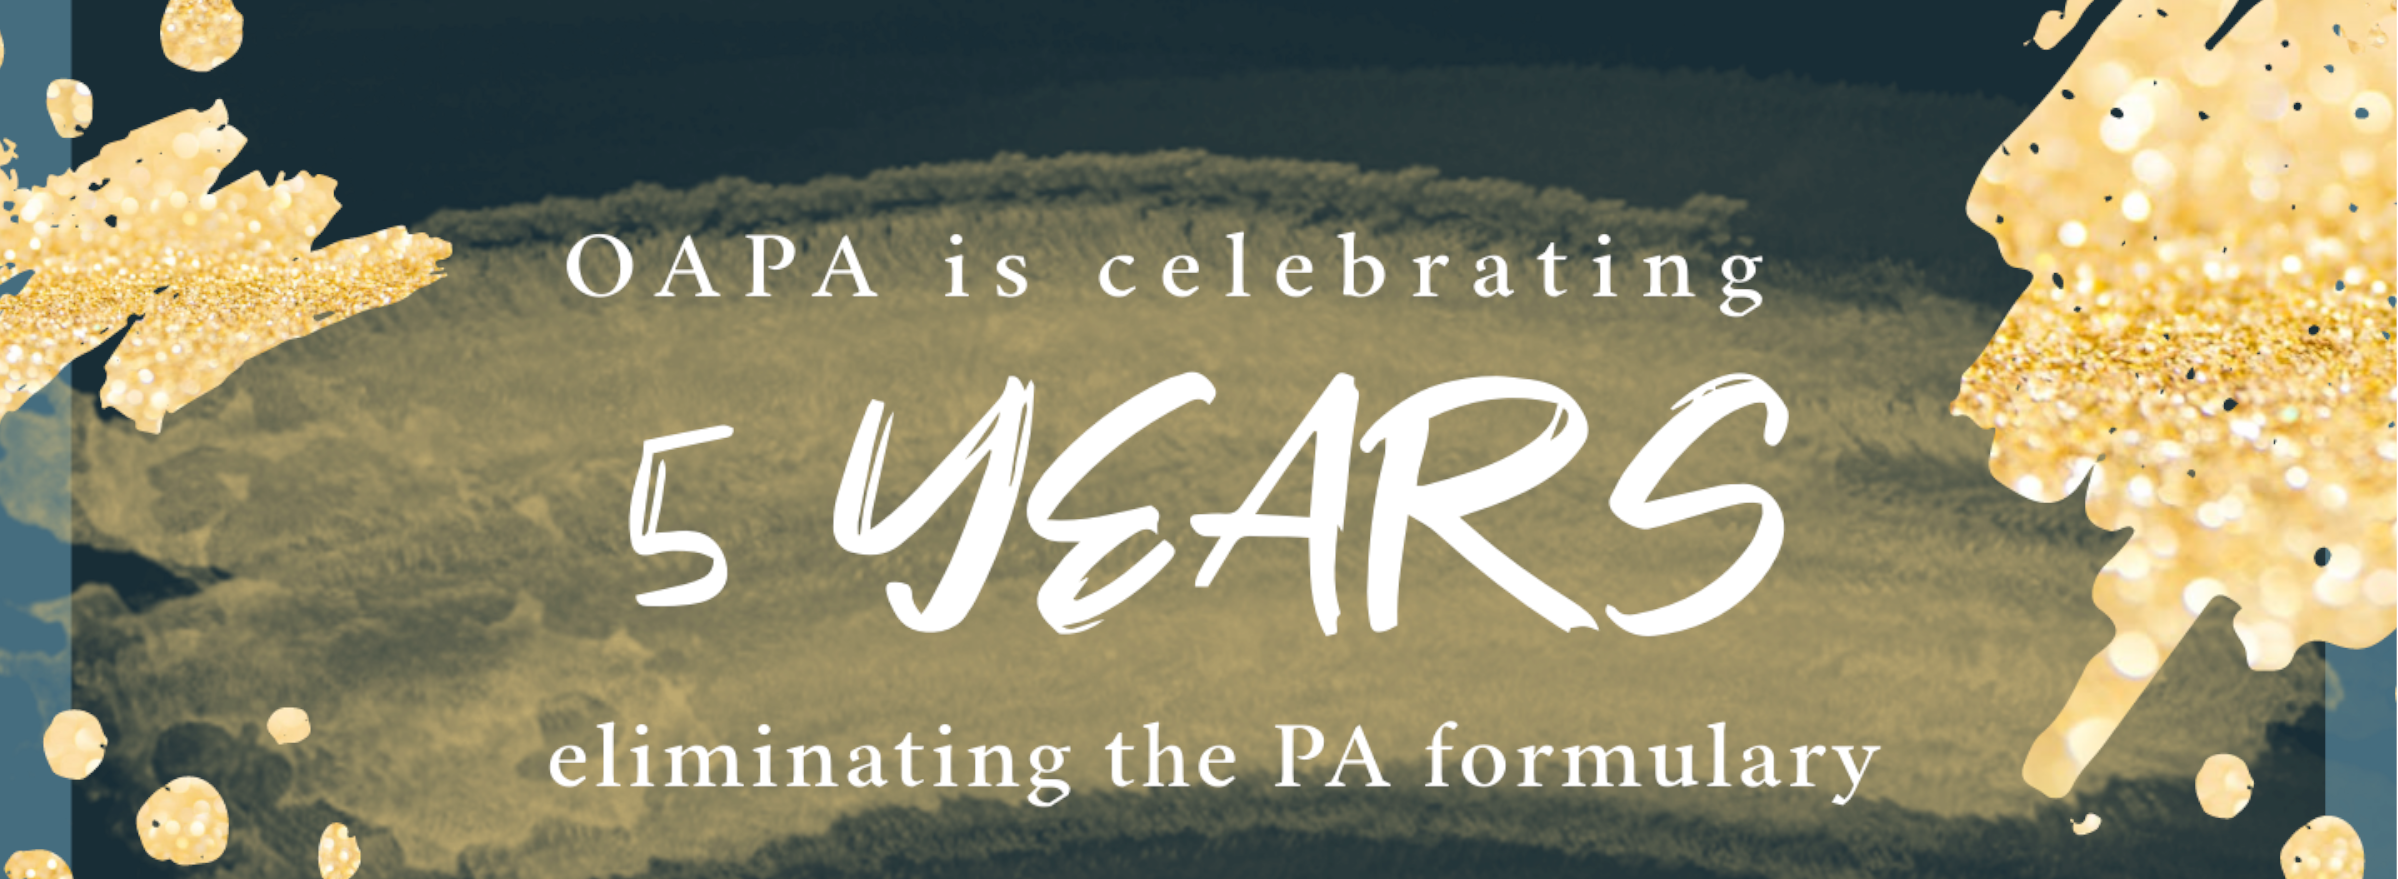 5 years of PA formulary elimination